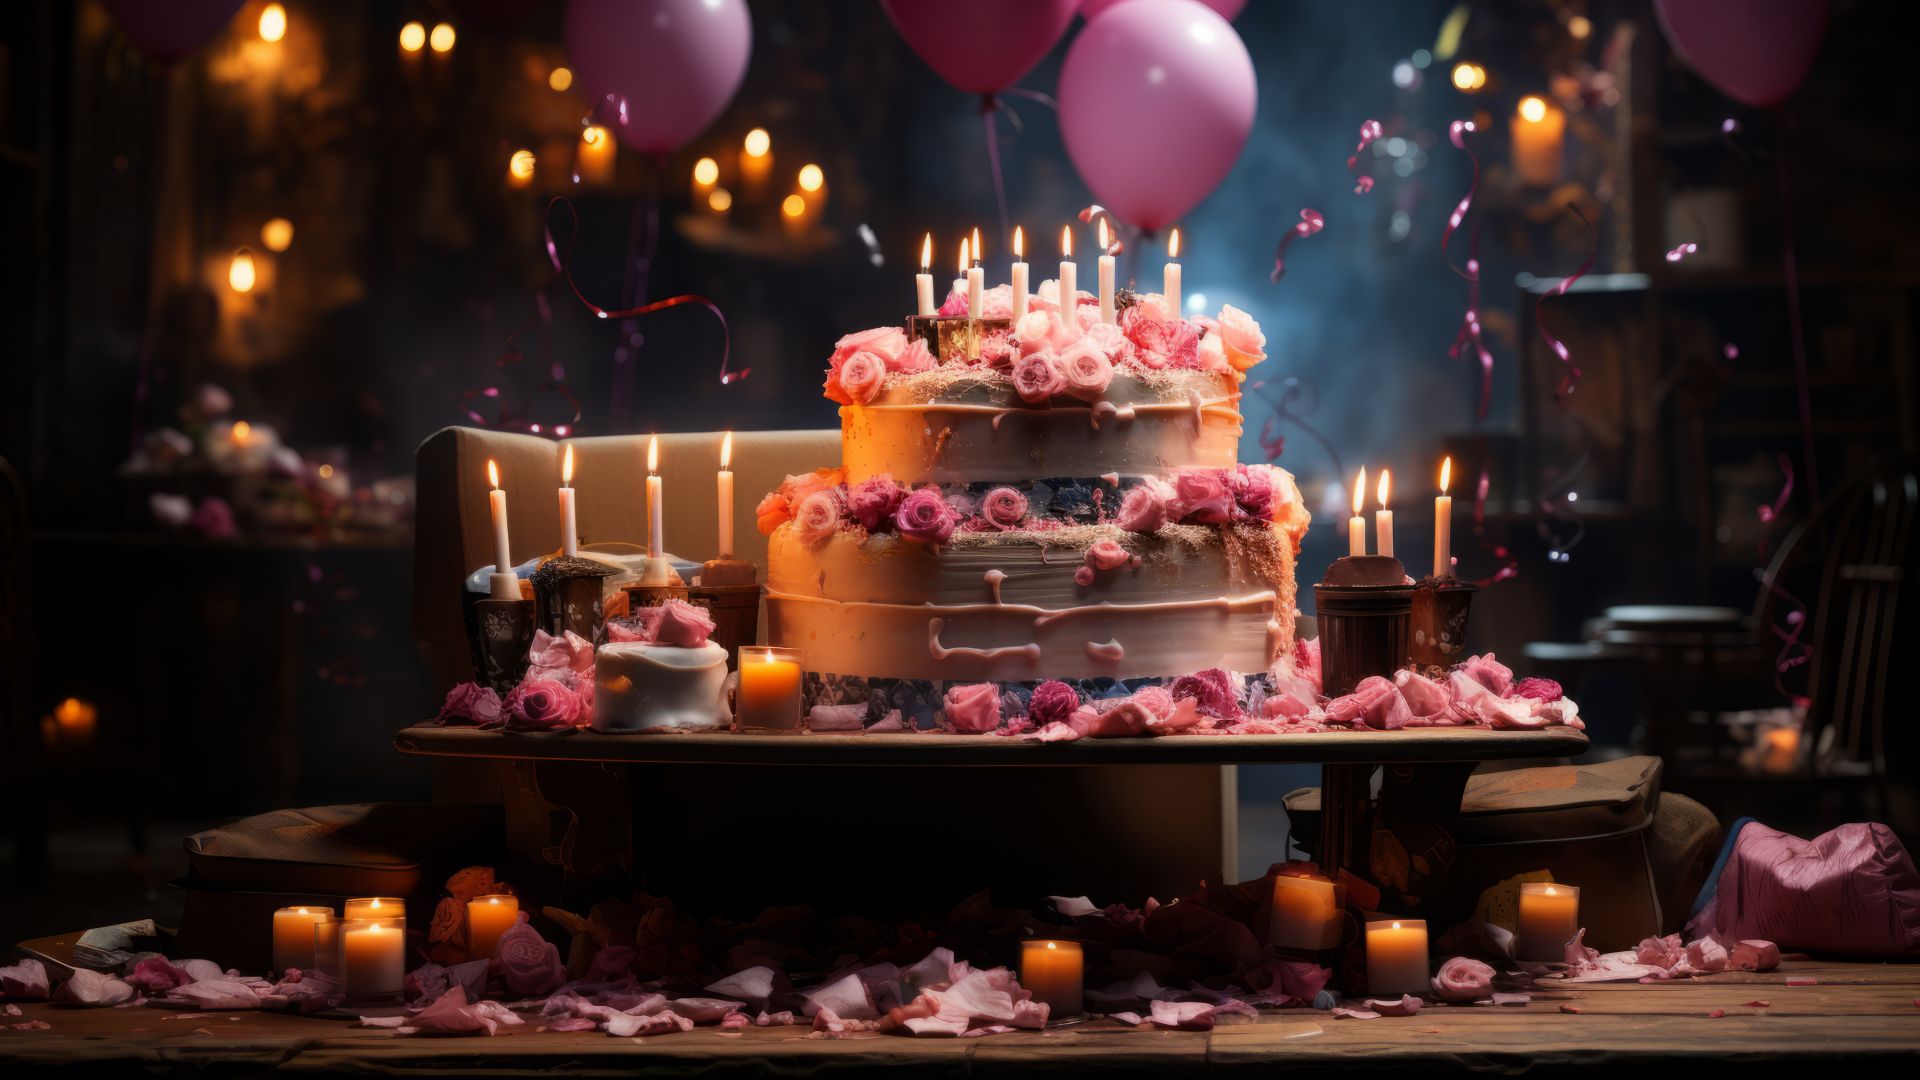 Birthday background, balloons, cake, gifts (horizontal)